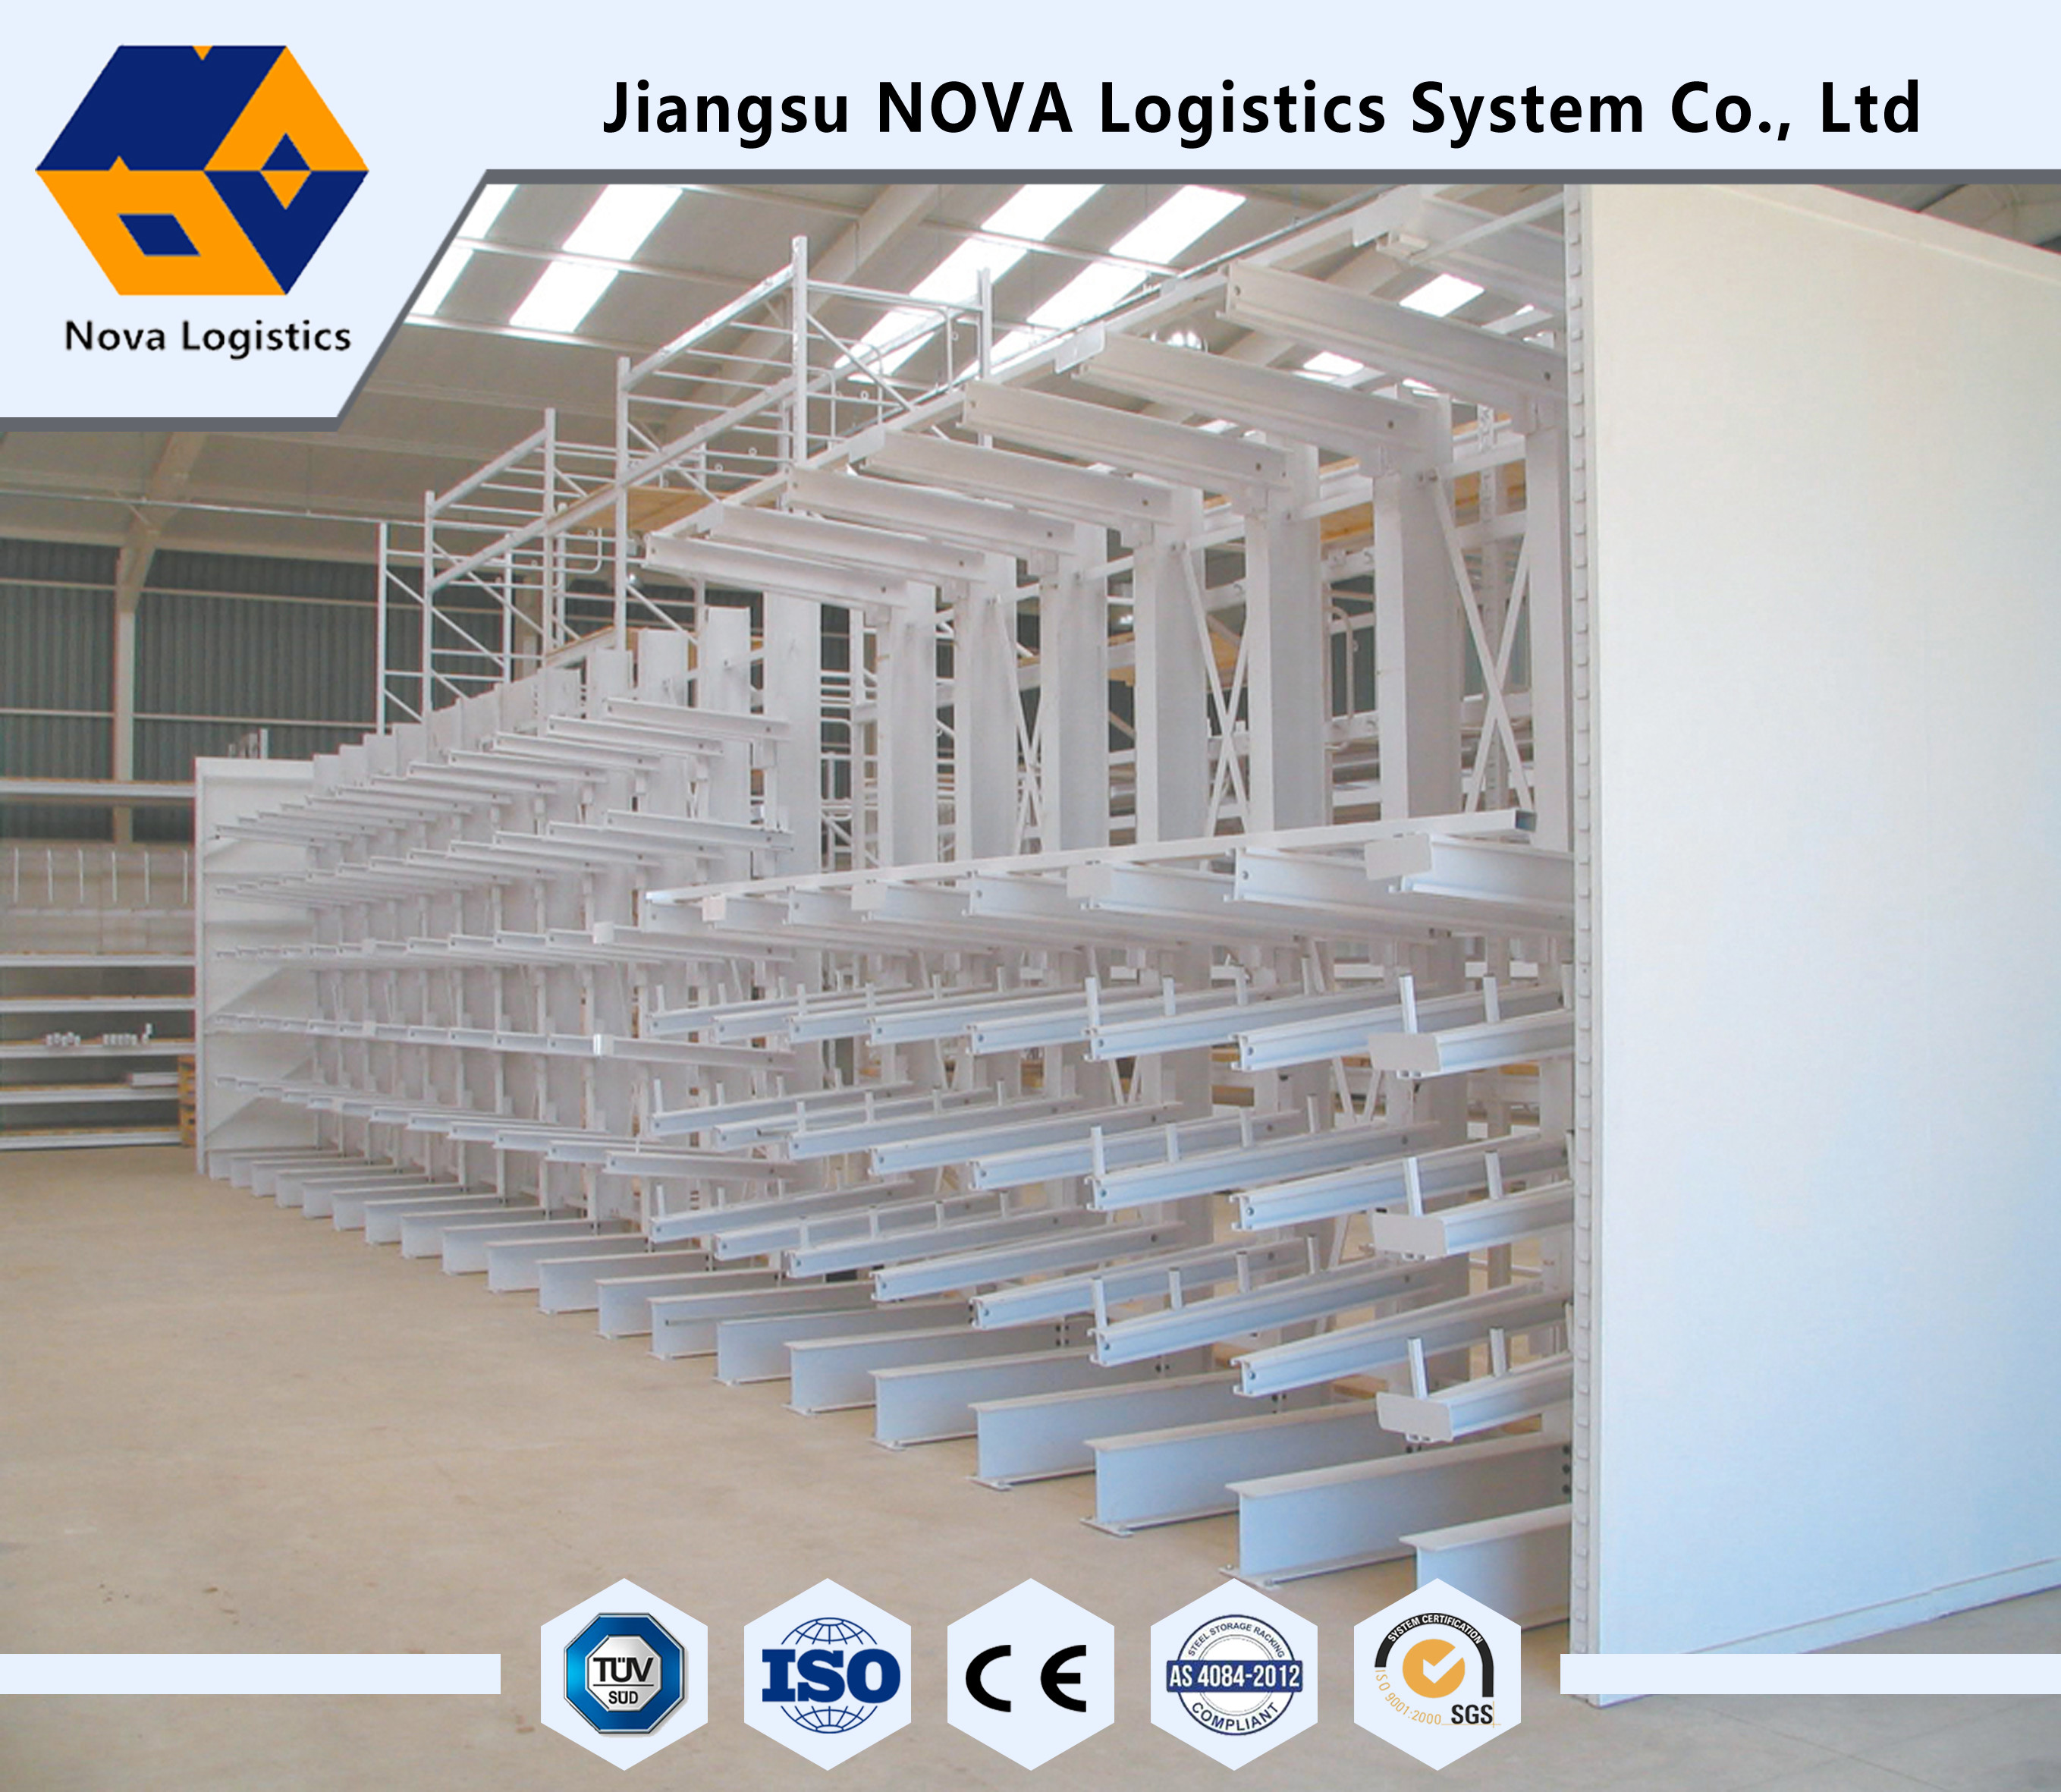 Long Shaped Loads Storage Cantilever Storage Racks Warehouse cantilever racks for steel